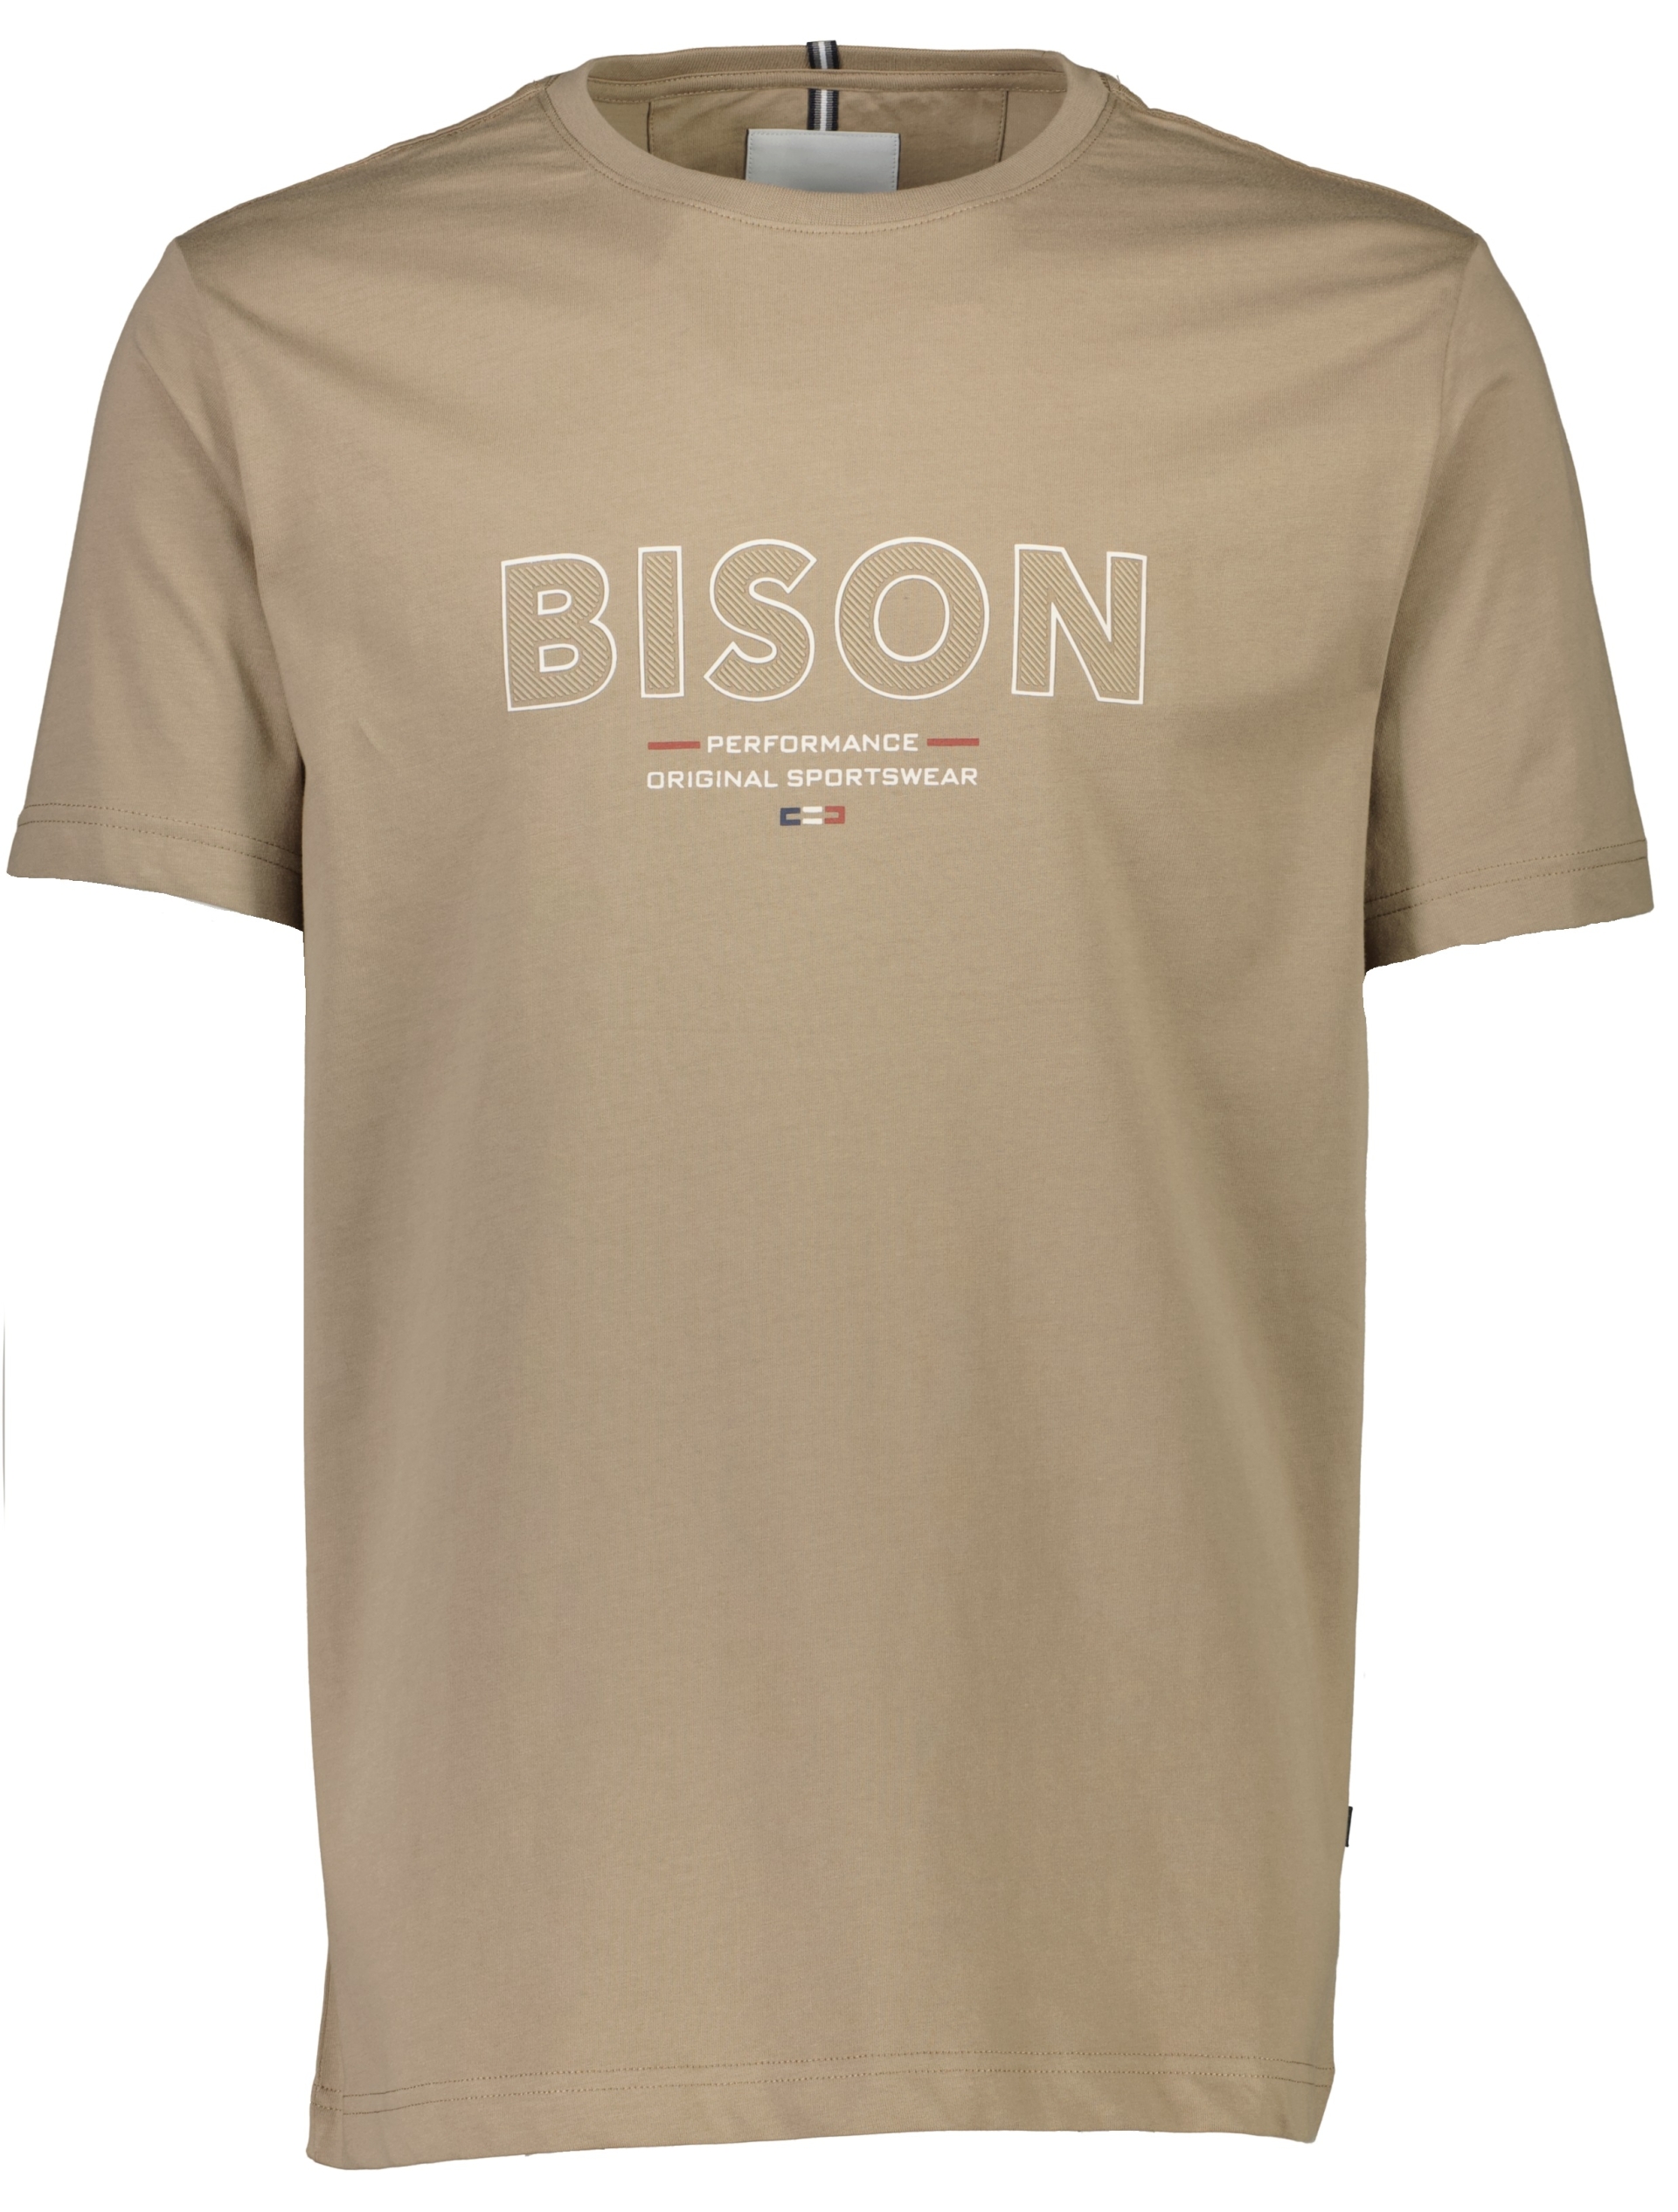 Bison T-shirt sand / sand